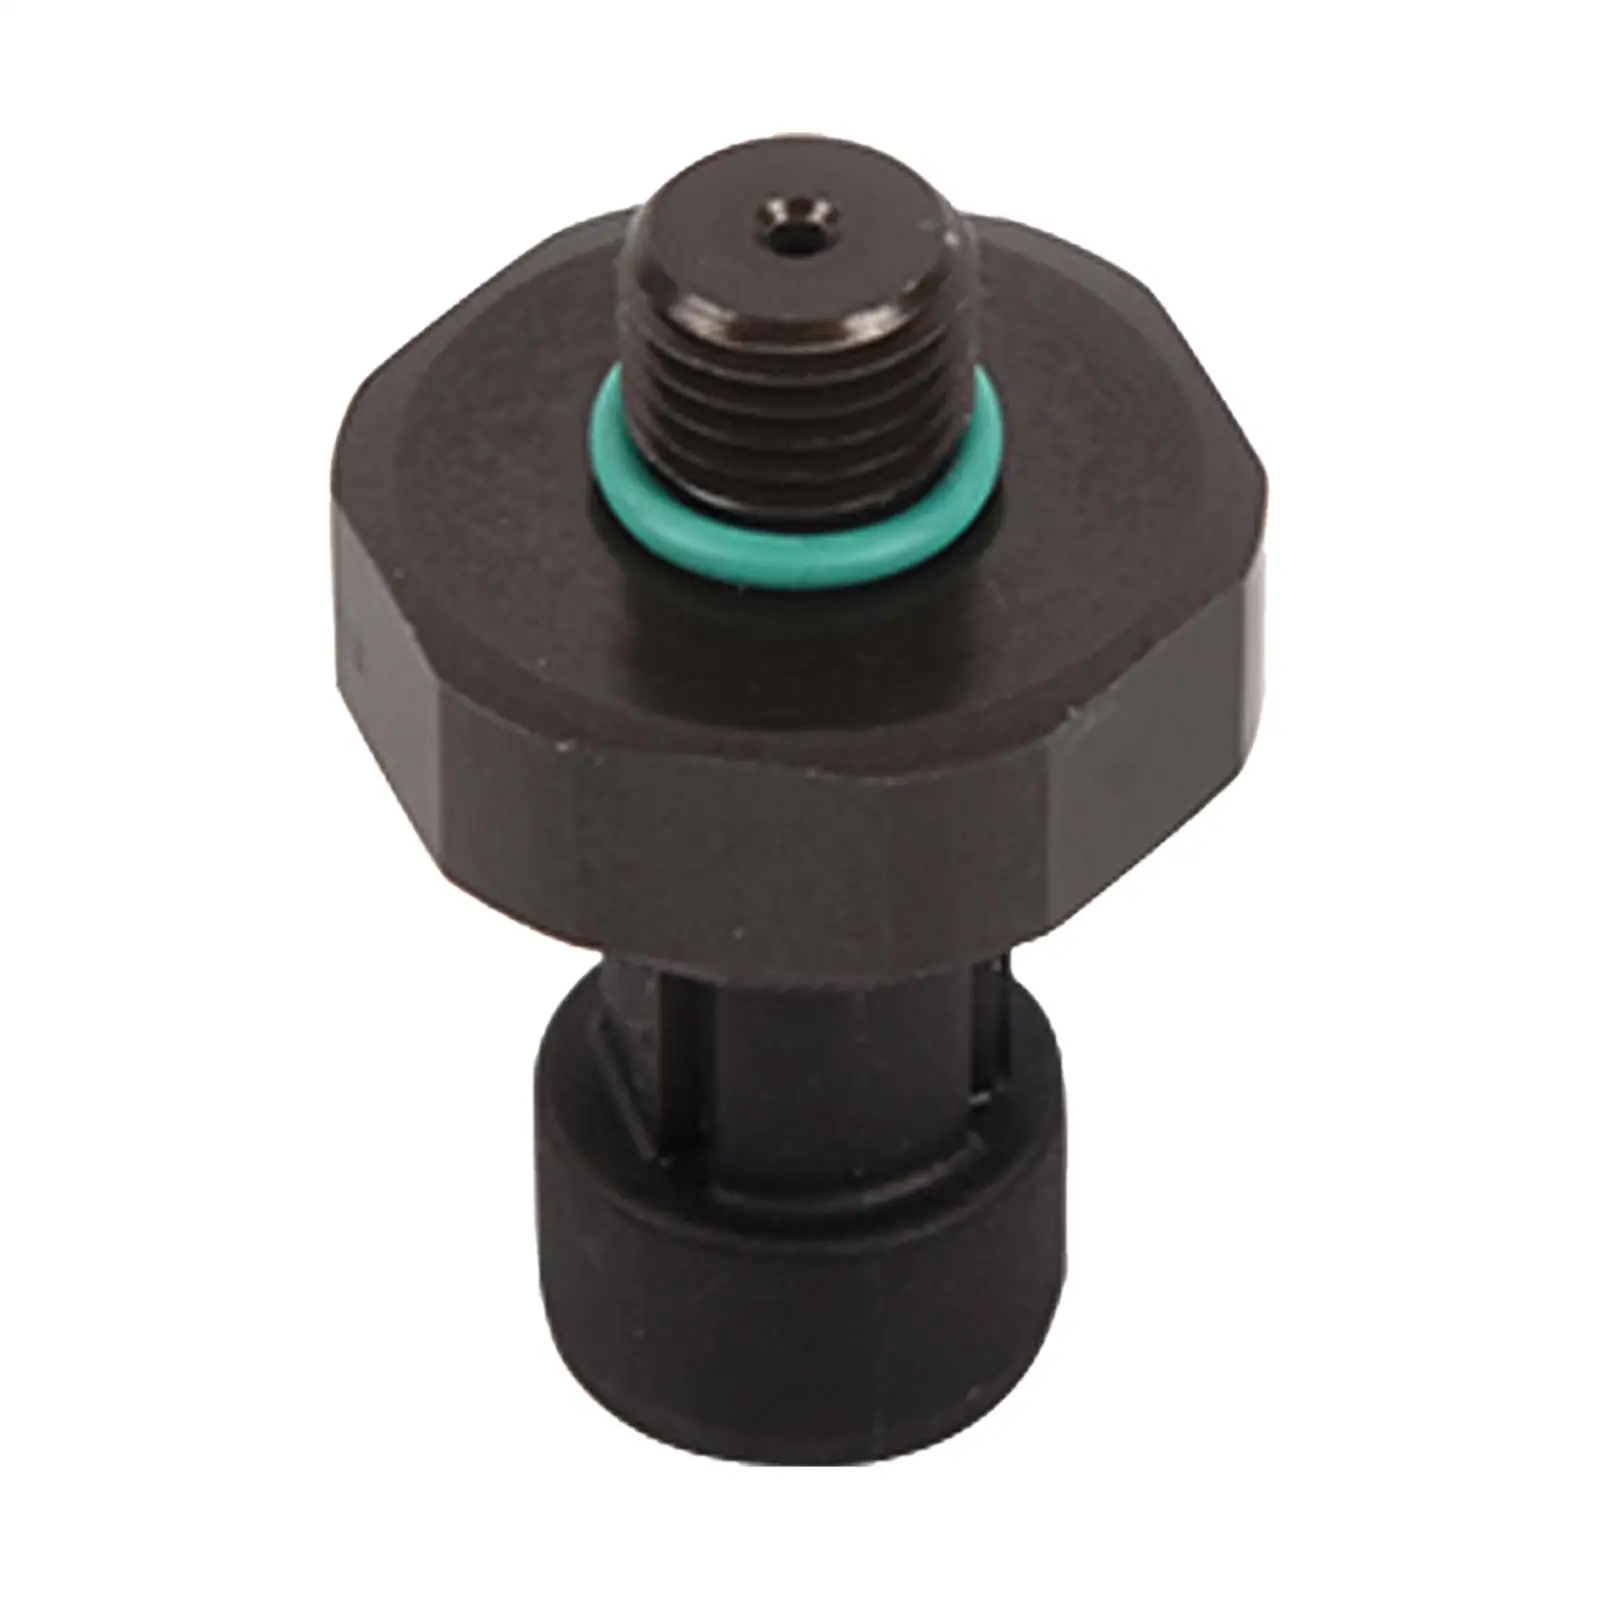 Oil Pressure Sensor Plastic Automobile Pressure Sensor for Bobcat Loader Skid Steer T595 T590 T870 T770 S450 T320 T750 T740